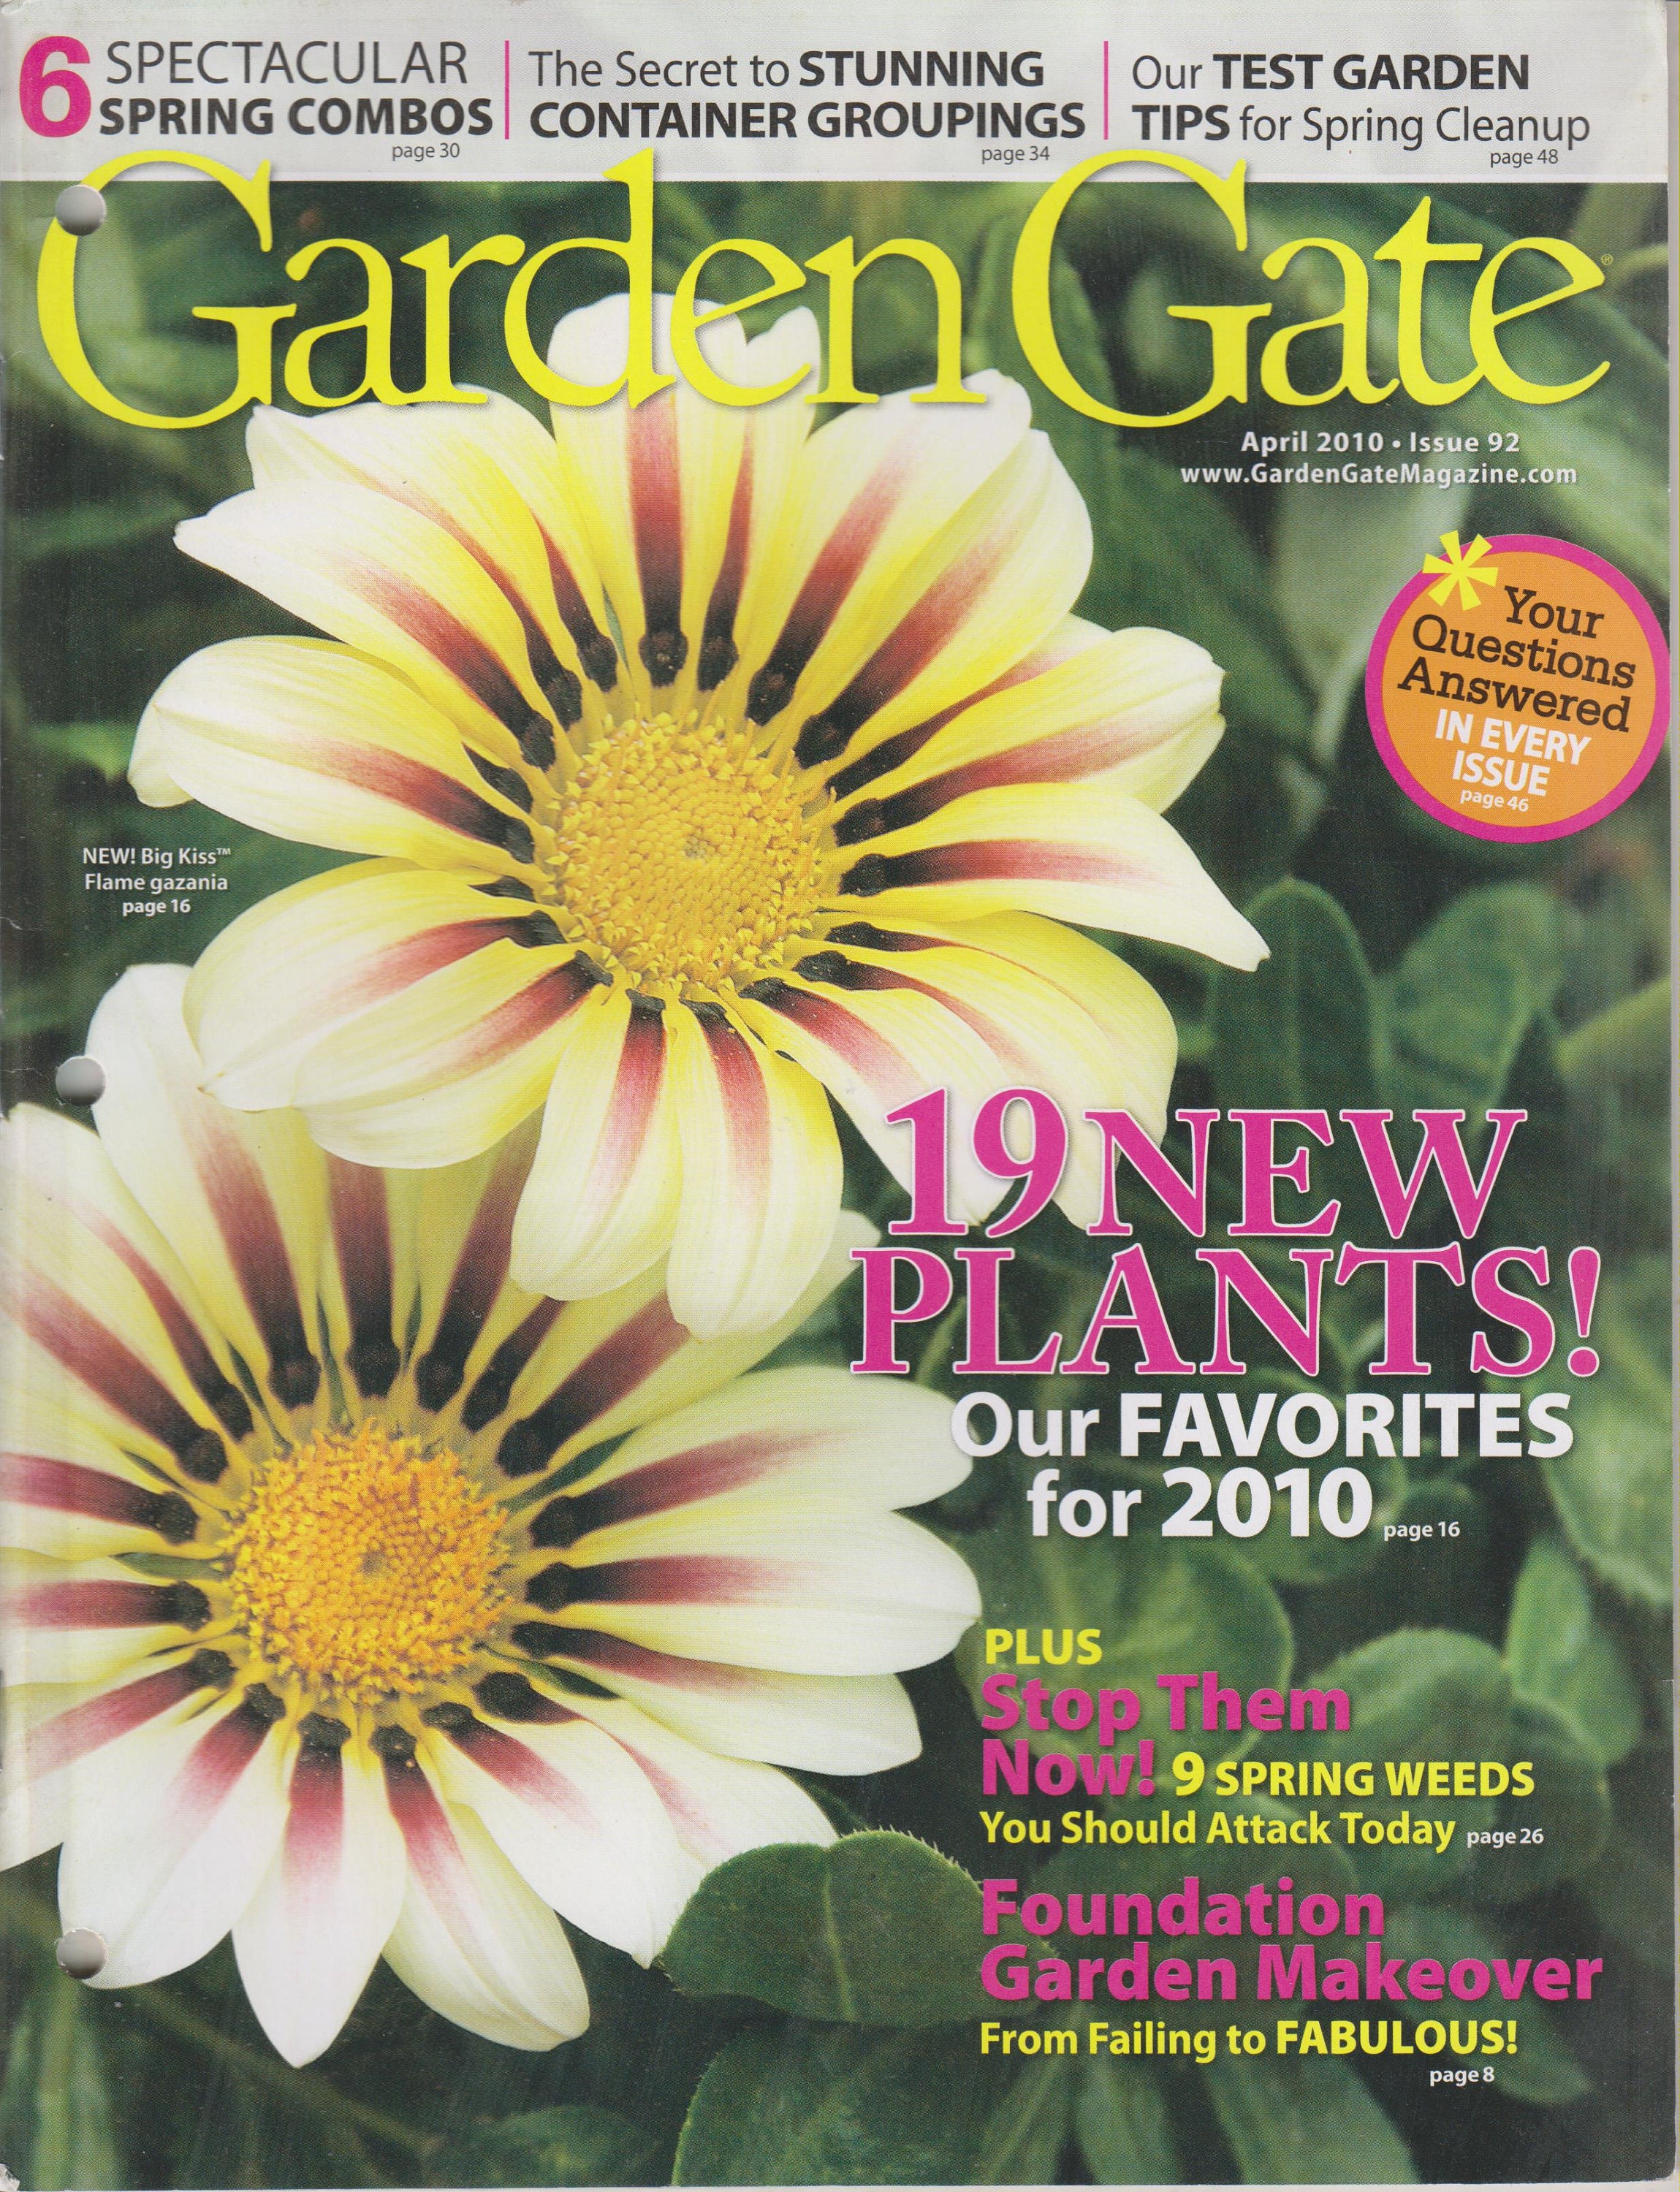 Garden Gate Magazine April 2010 6 Spectacular Spring Combos